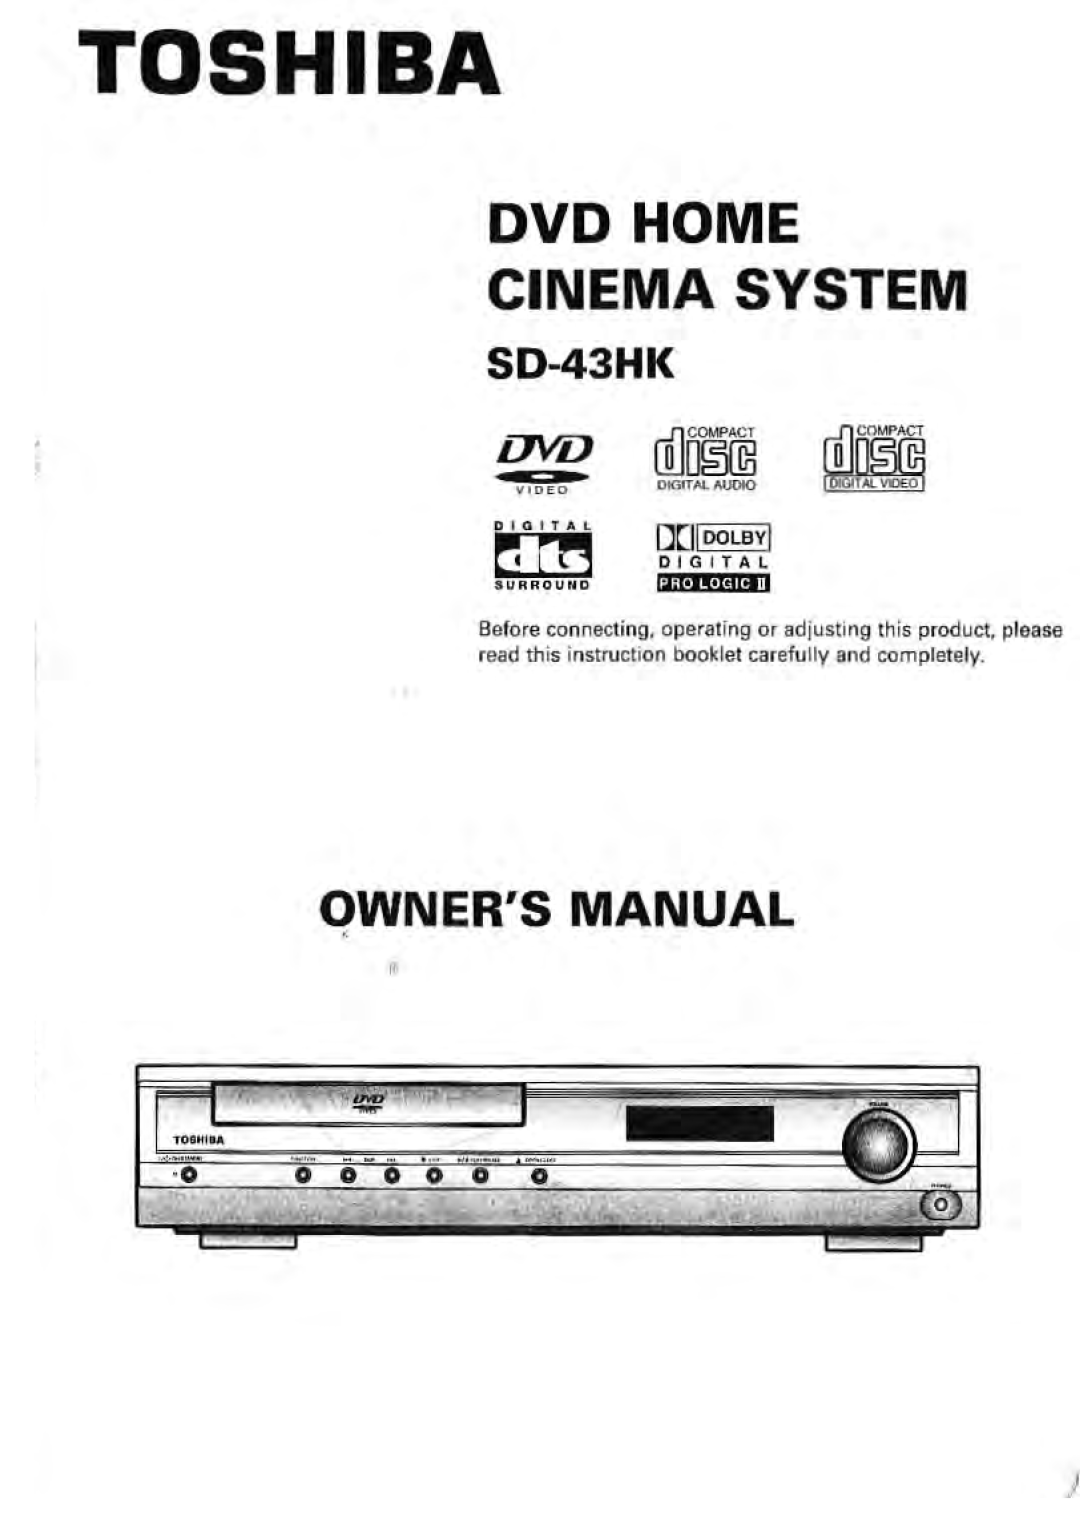 Toshiba SD-43HK owner manual Toshiba, Dvd Home Cinema System, Owner S Manual, 0 0 0 0, Dolby, ova COKIPA^l, Digital Al Yq 